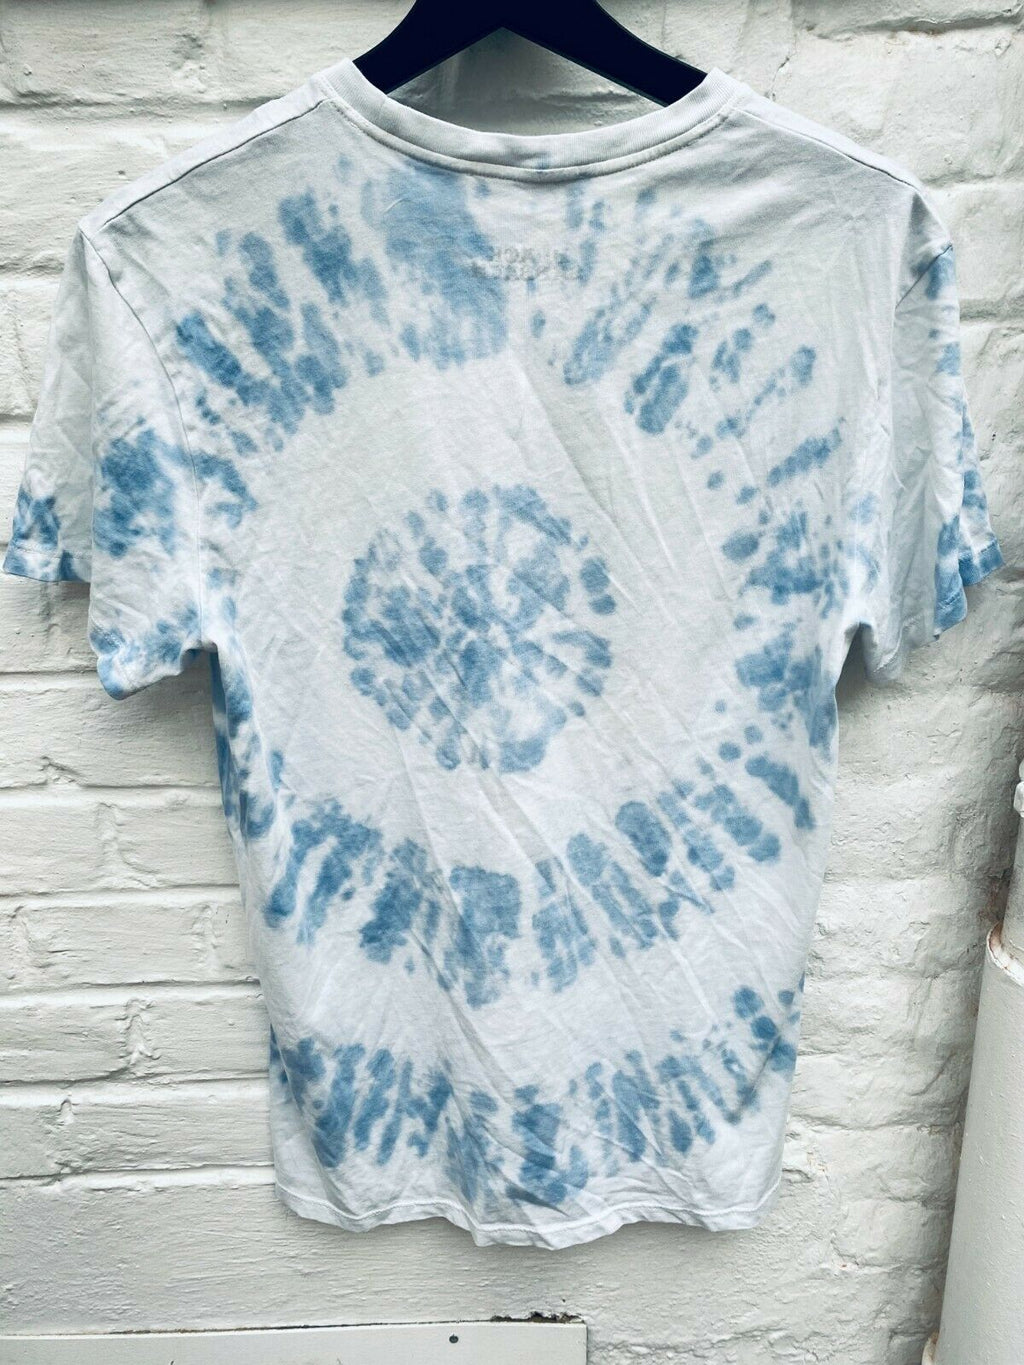 Sandro X Black Sabbath Cross T-shirt Blue Tie Dye Color Size XS